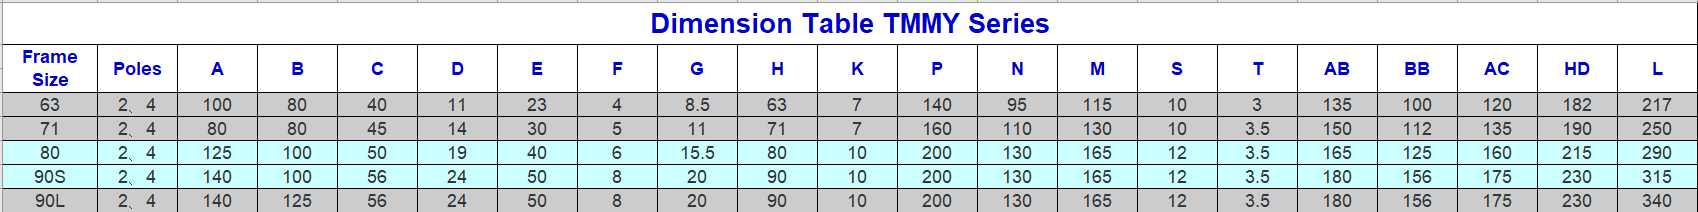 Dimension Table ΤΜΜΥ Series